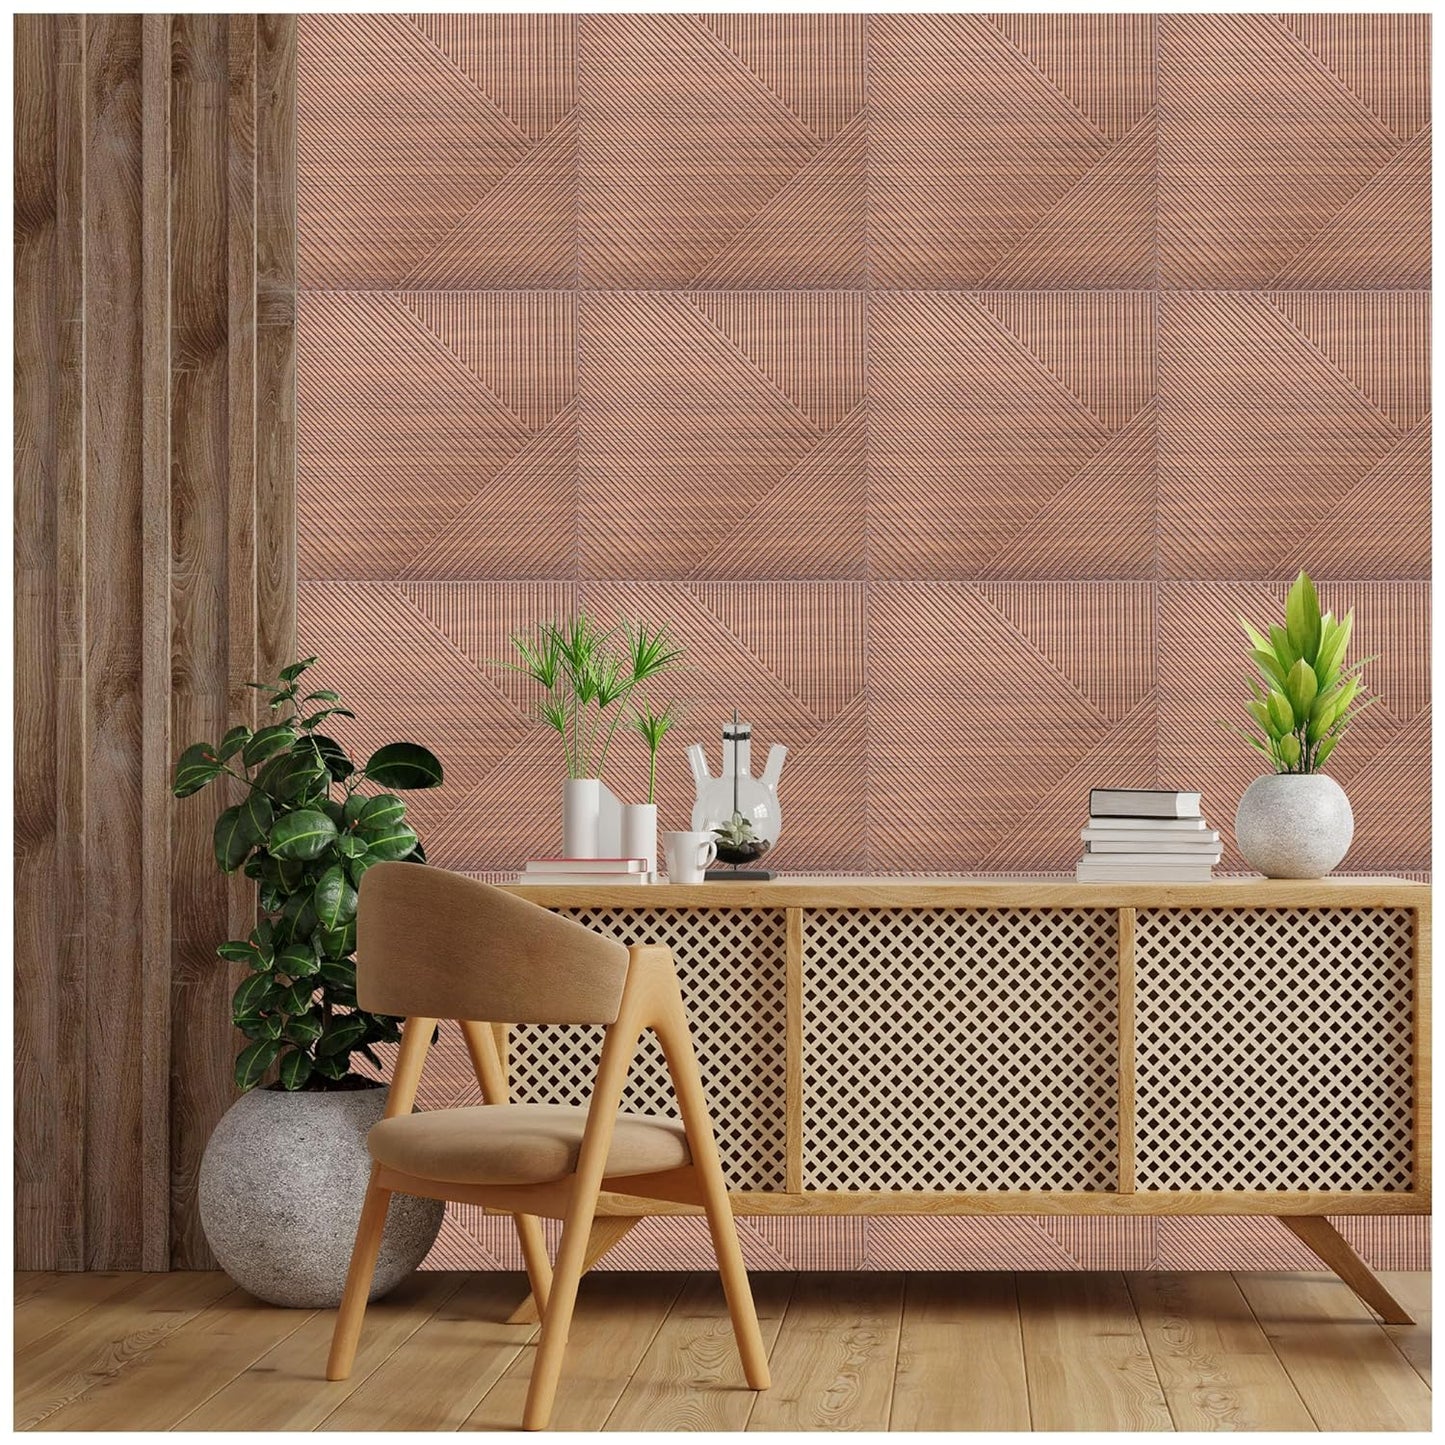 Kayra Decor 3D Self Adhesive Wall Panel -WalnutWood Stripe Design - (Size 50 x 50 CM)